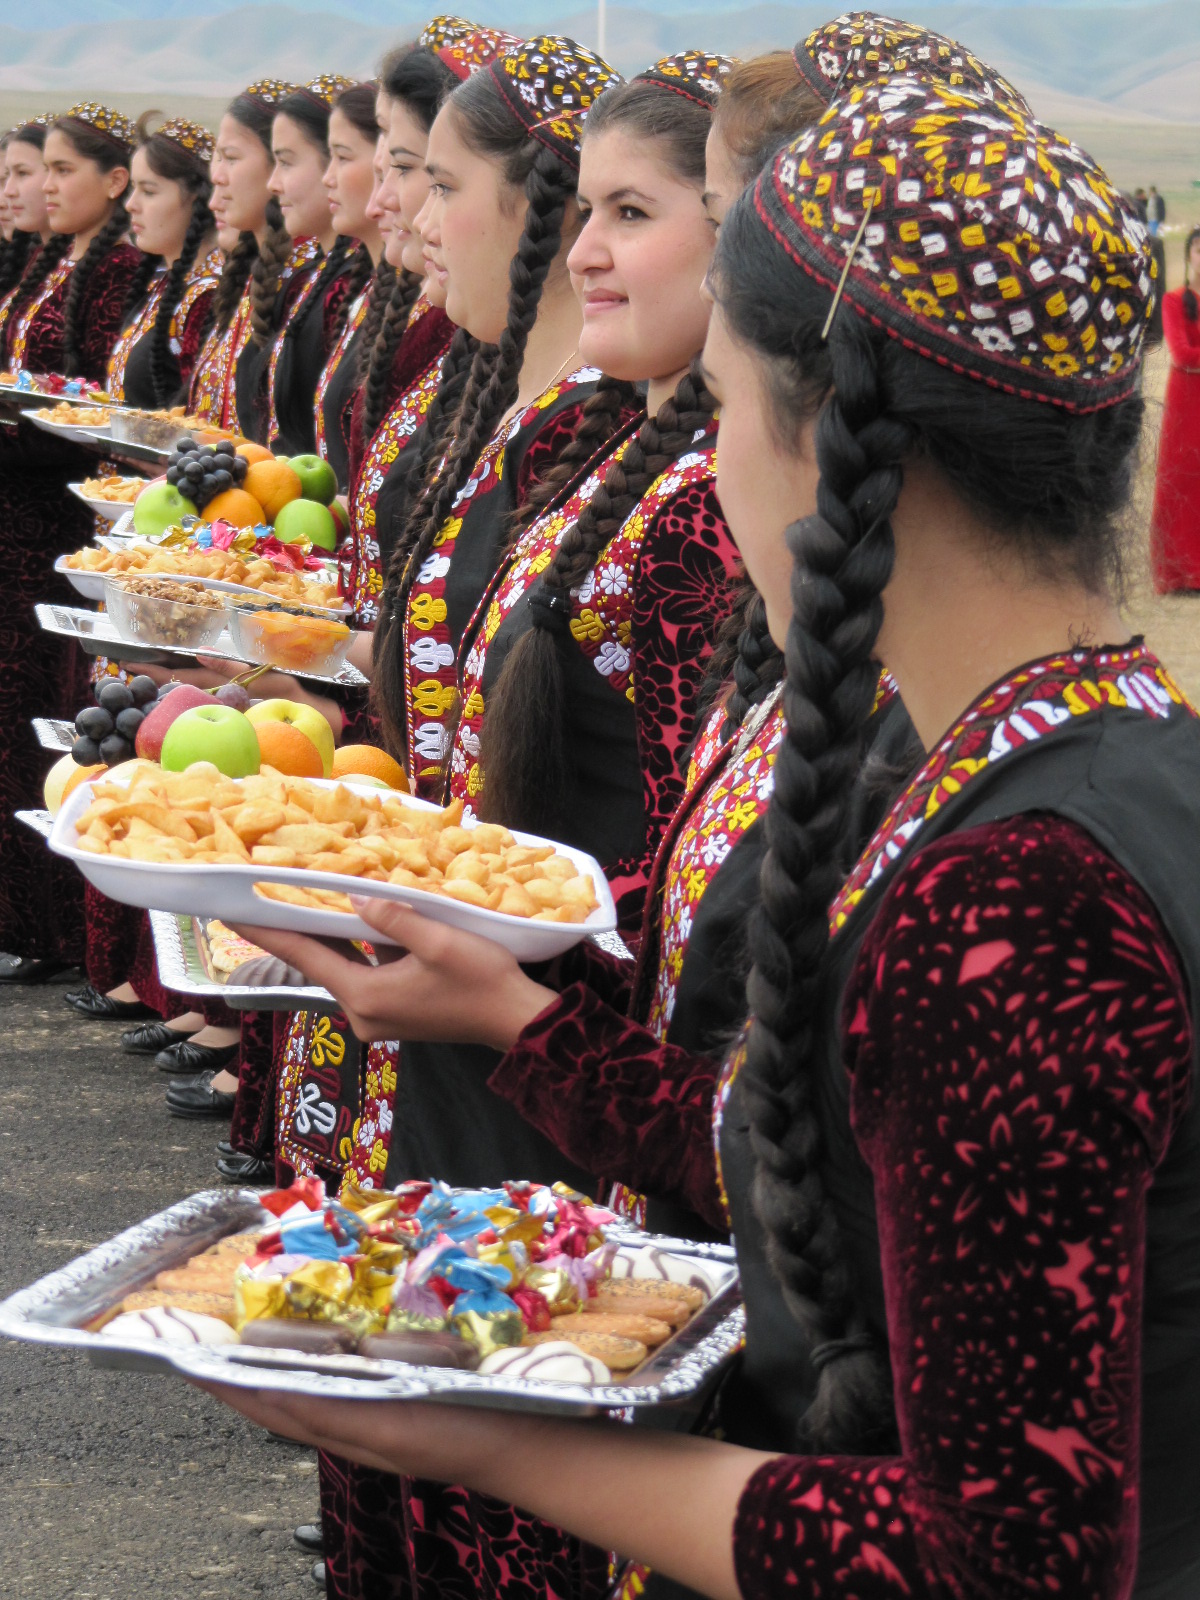 Damer og jenter i Turkmenistan.